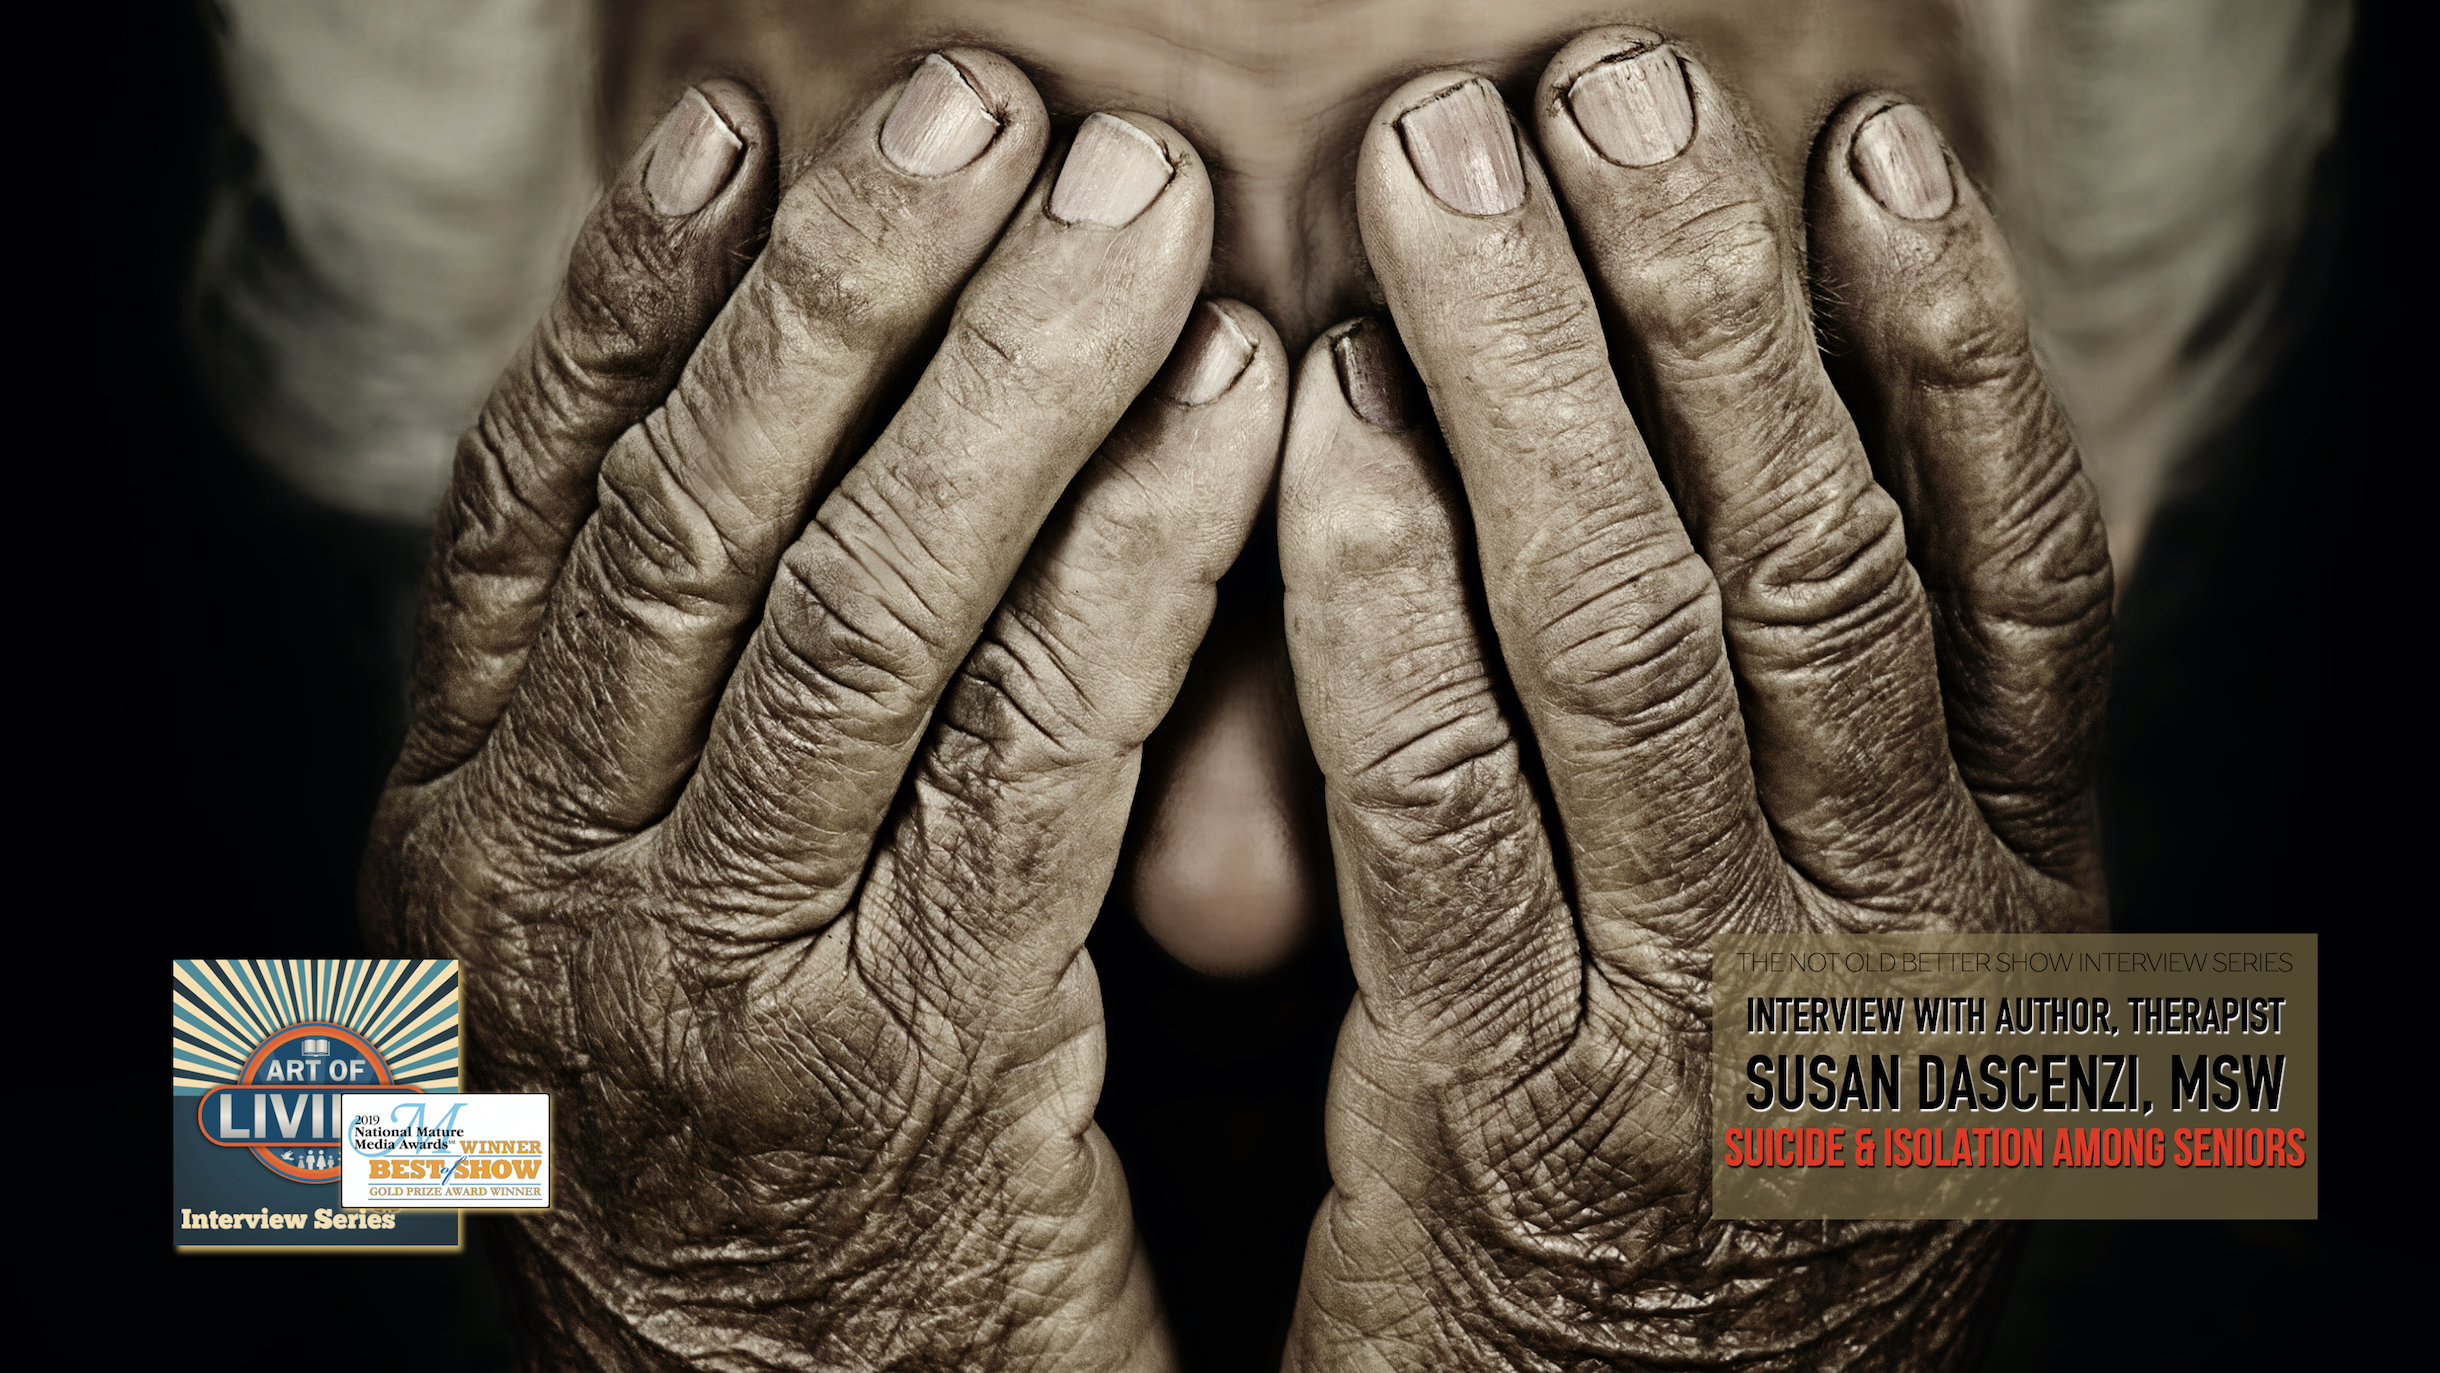 Suicide and Isolation Among Seniors – Susan Dascenzi